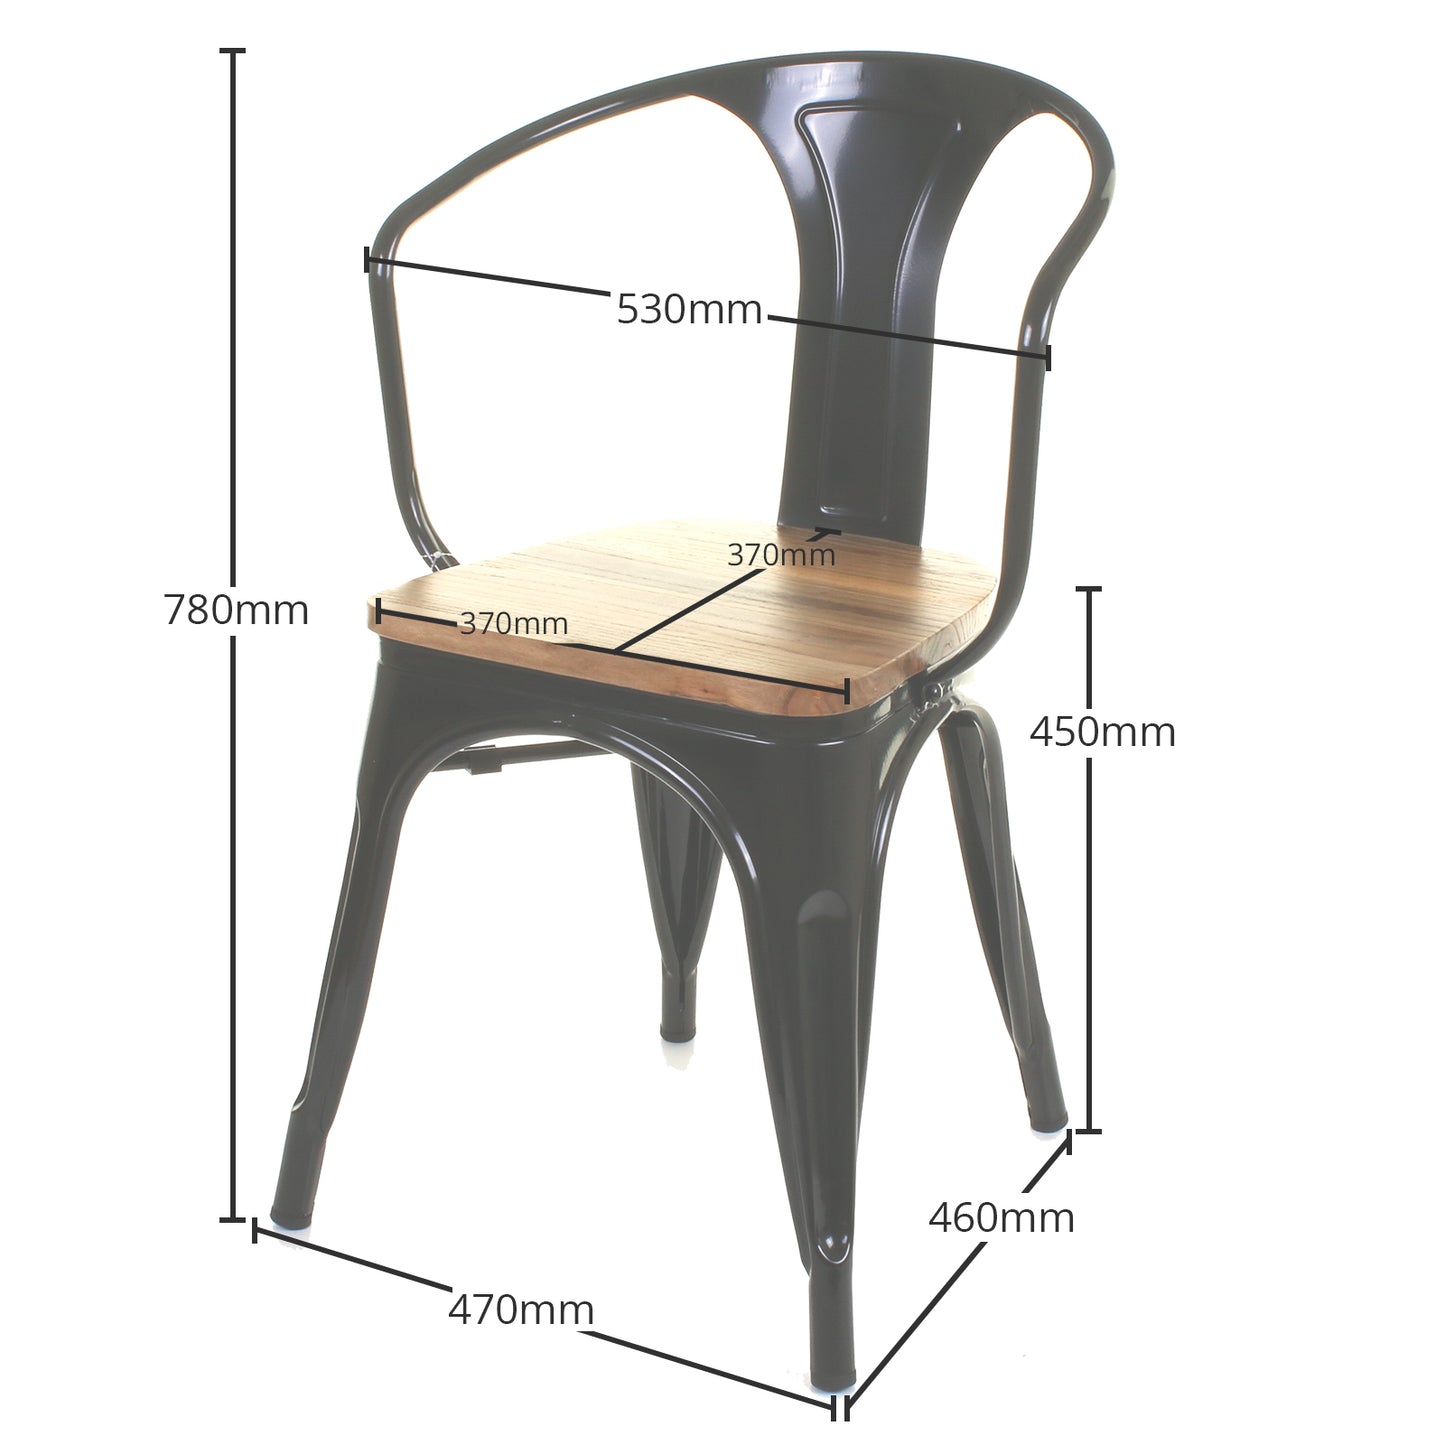 5PC Taranto Table, 3 Florence Chairs & Nuoro Bench Set - Onyx Matt Black